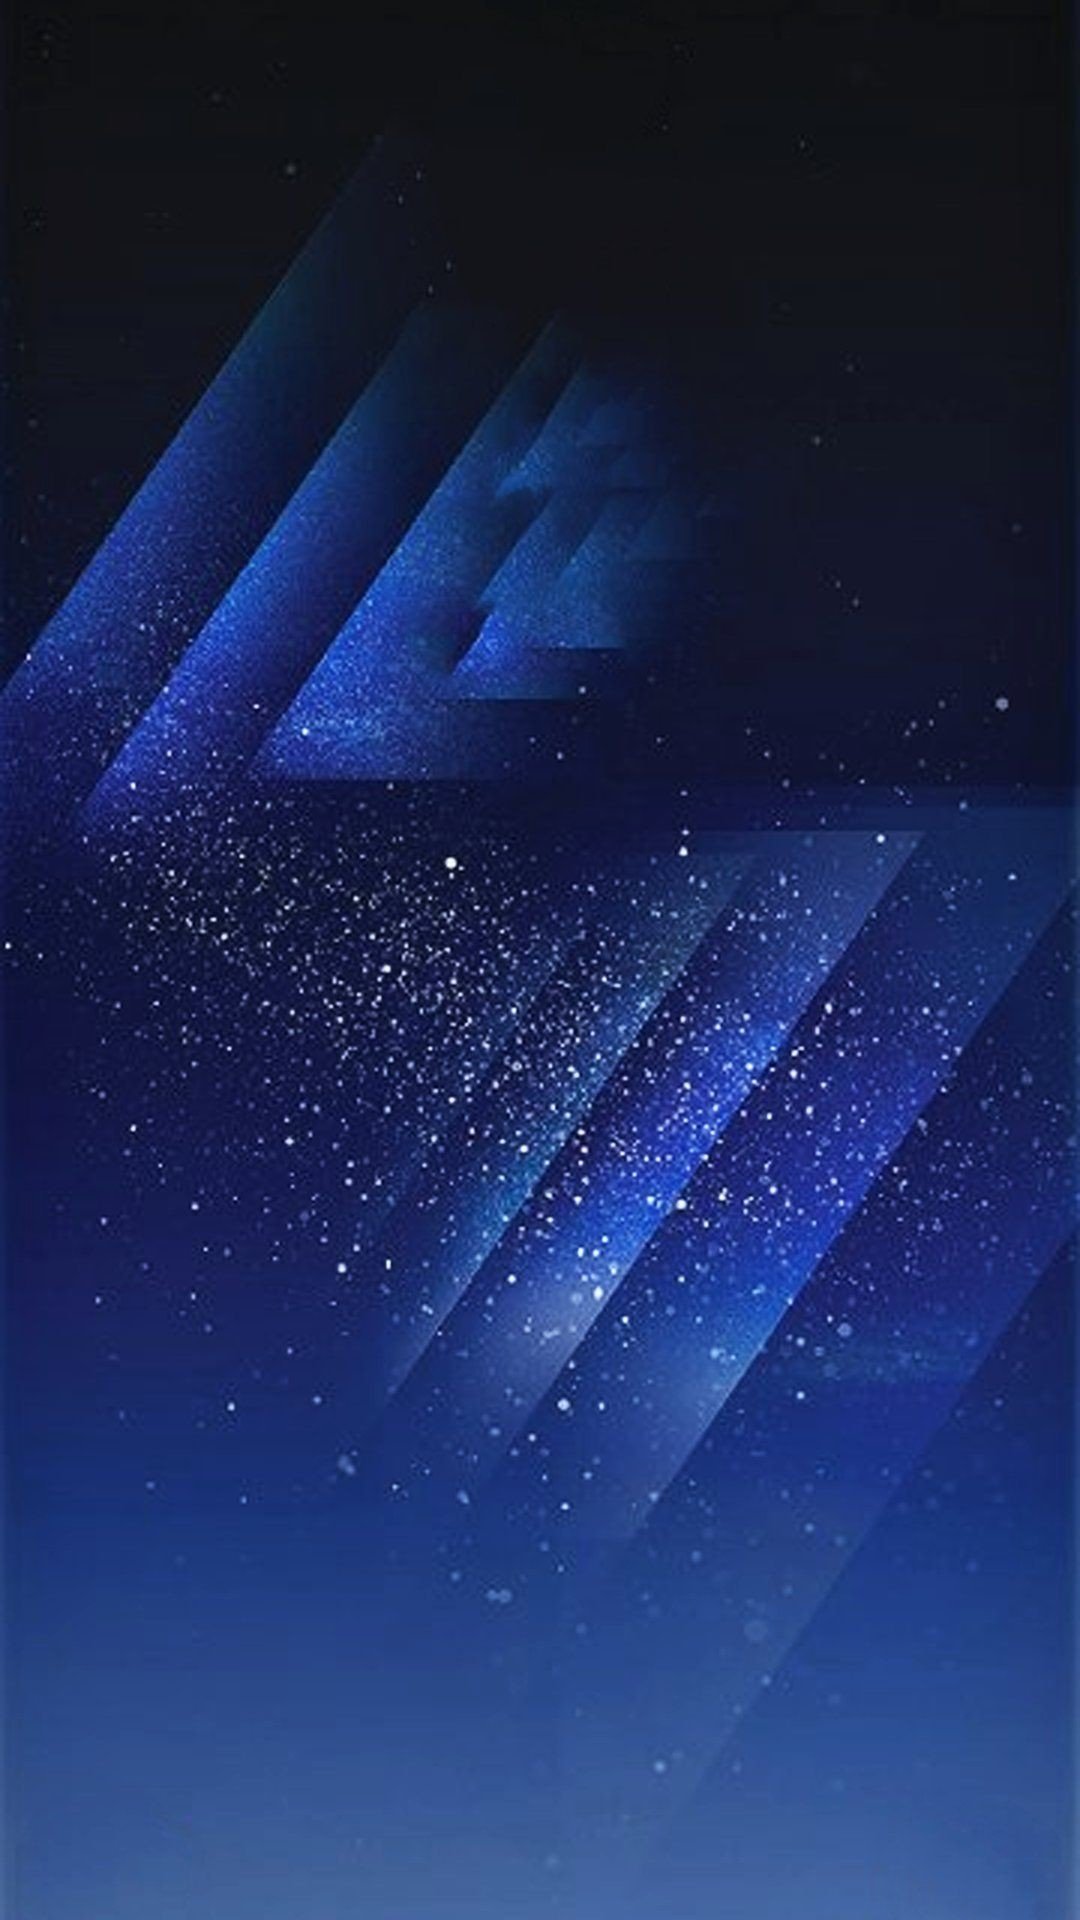 50+] Wallpaper S8 Samsung Lockscreenn